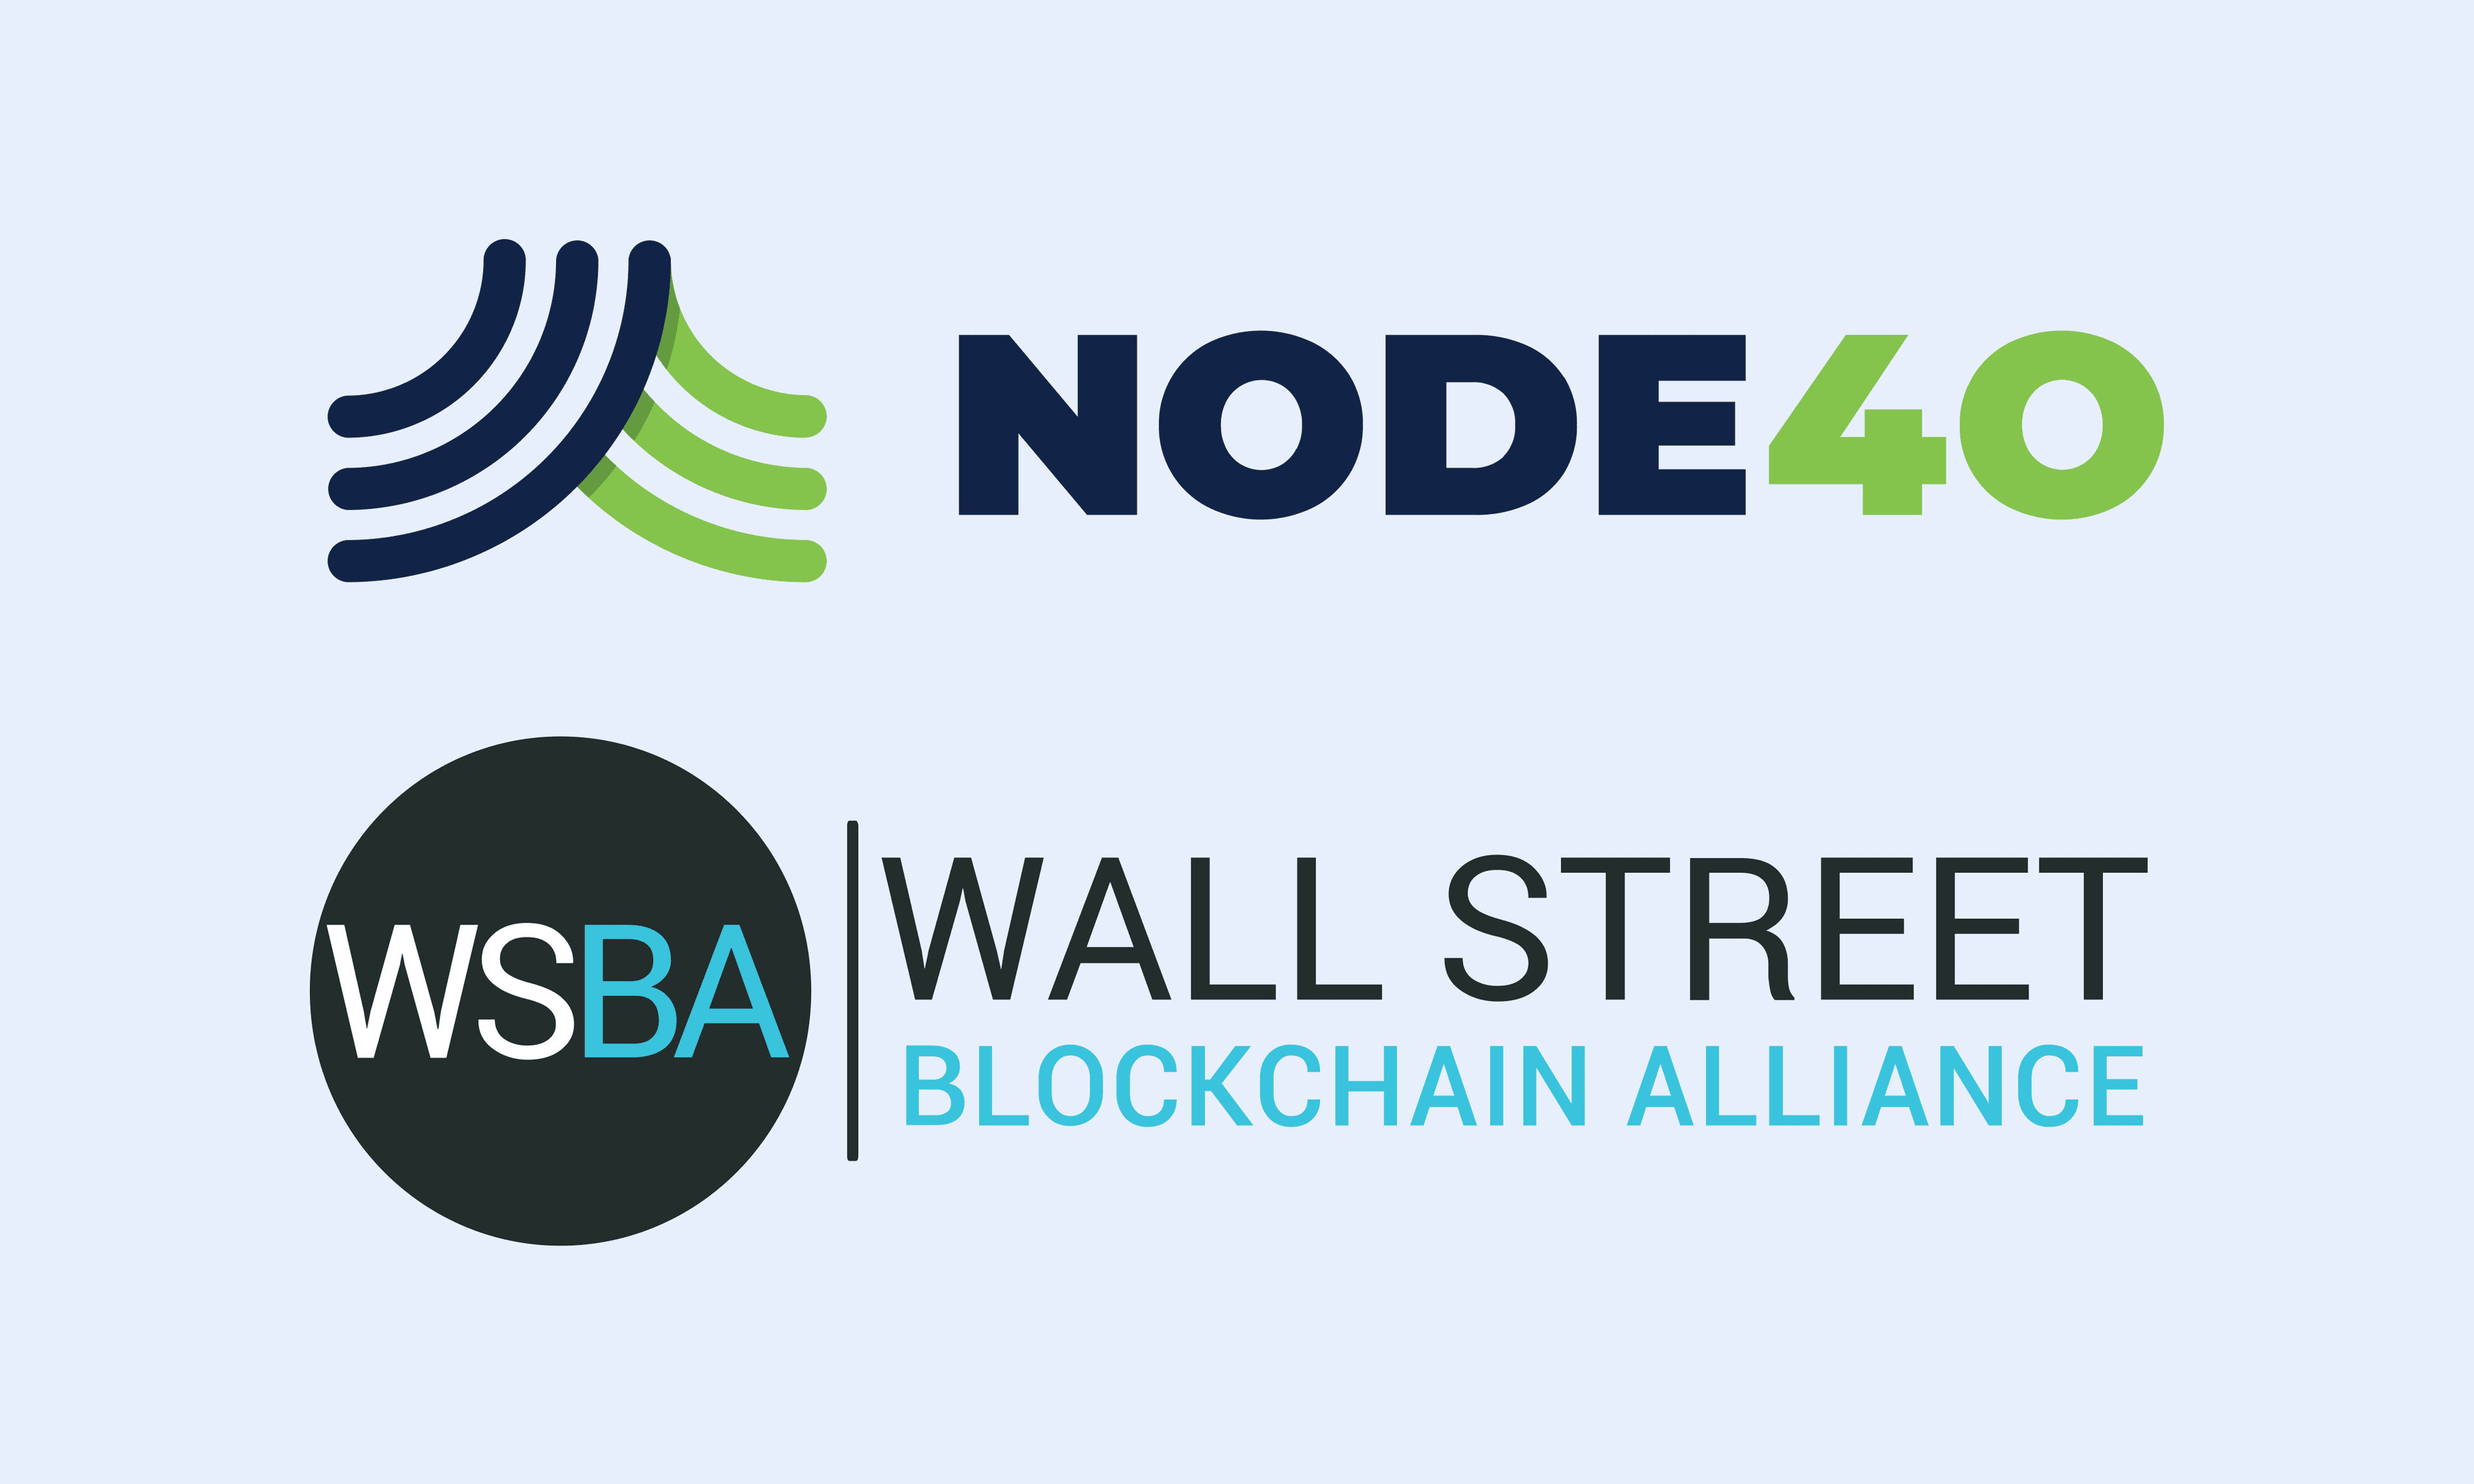 NODE40 joins the Wall Street Blockchain Alliance